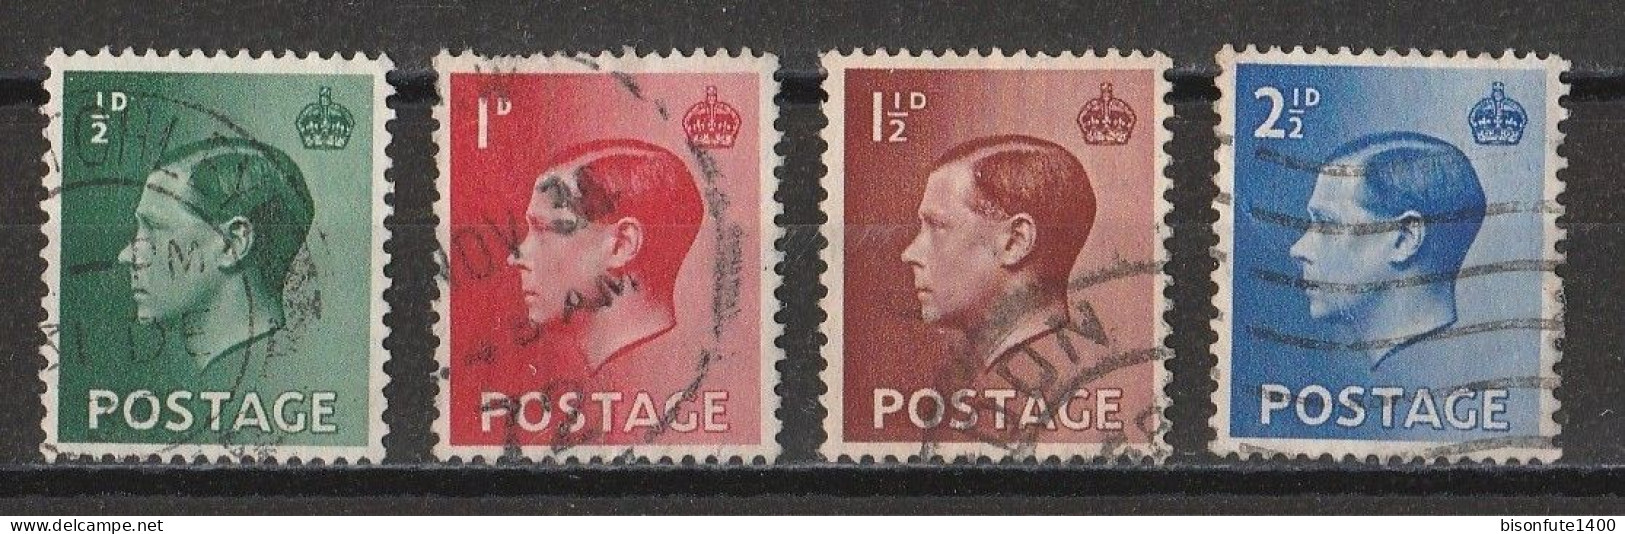 Grande-Bretagne 1936 : Timbres Yvert & Tellier N° 205 - 206 - 207 Et 208 Oblitérés. - Oblitérés